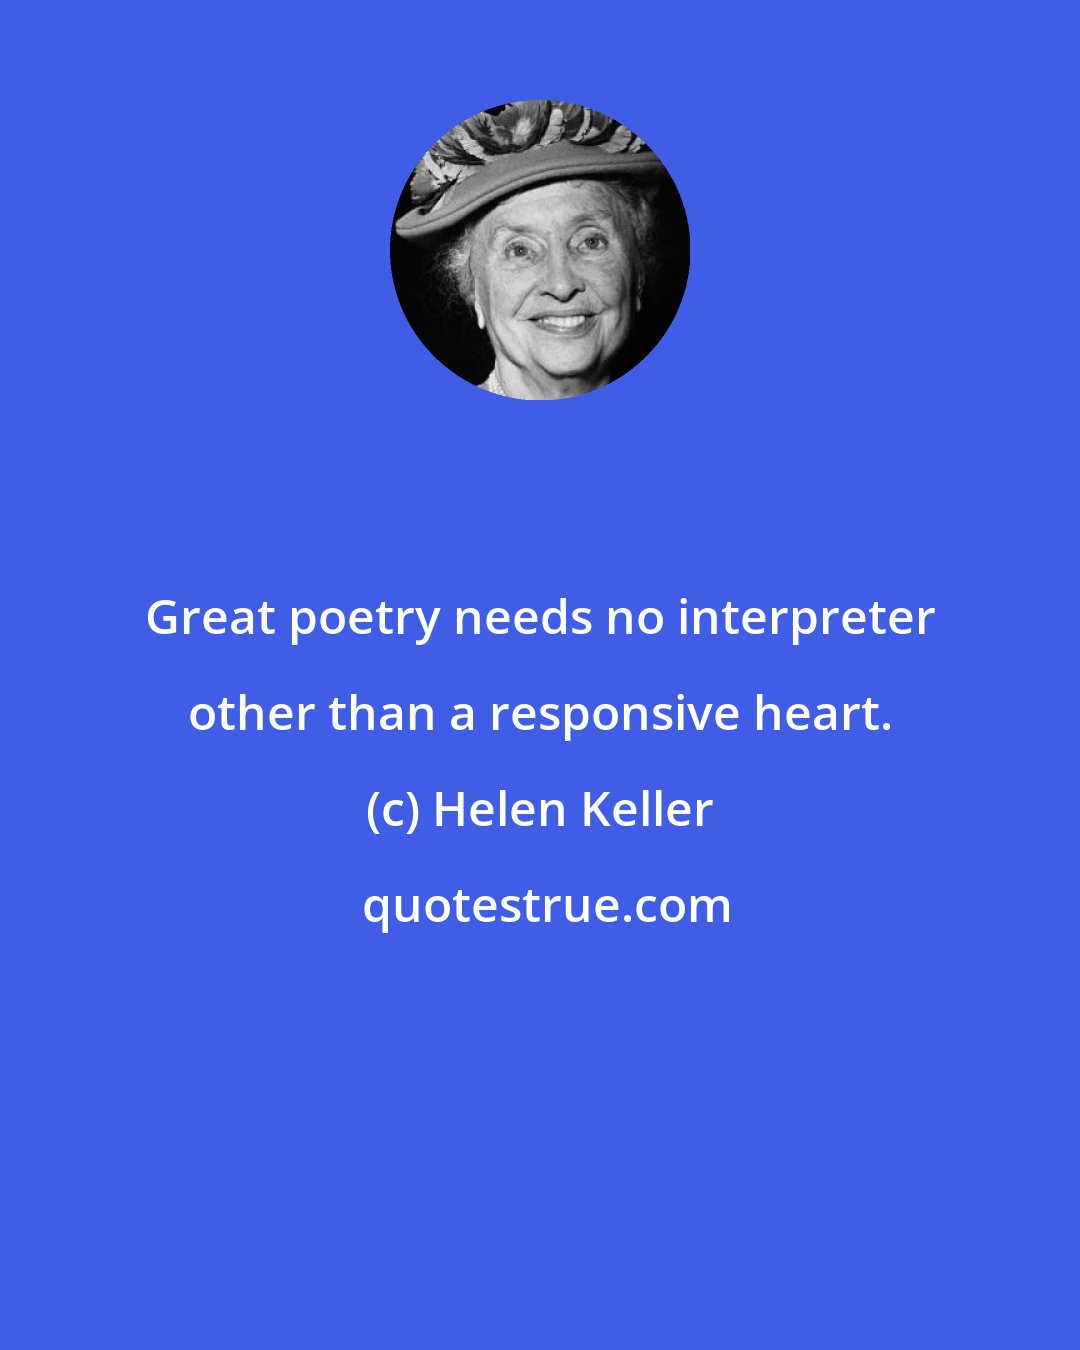 Helen Keller: Great poetry needs no interpreter other than a responsive heart.